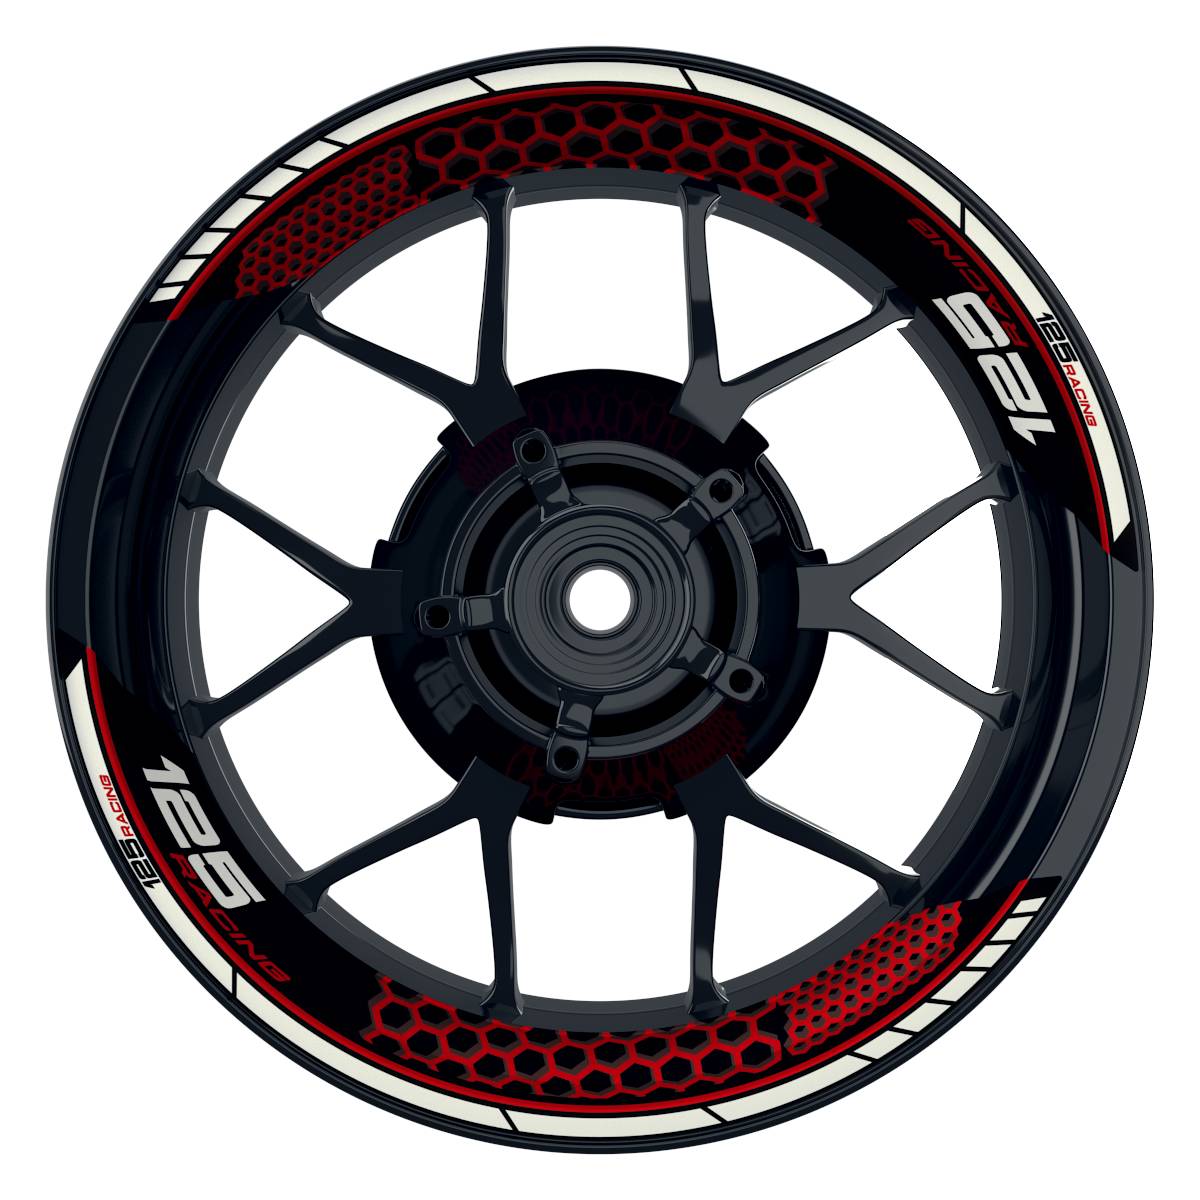 KTM Racing 125 Hexagon schwarz rot Frontansicht